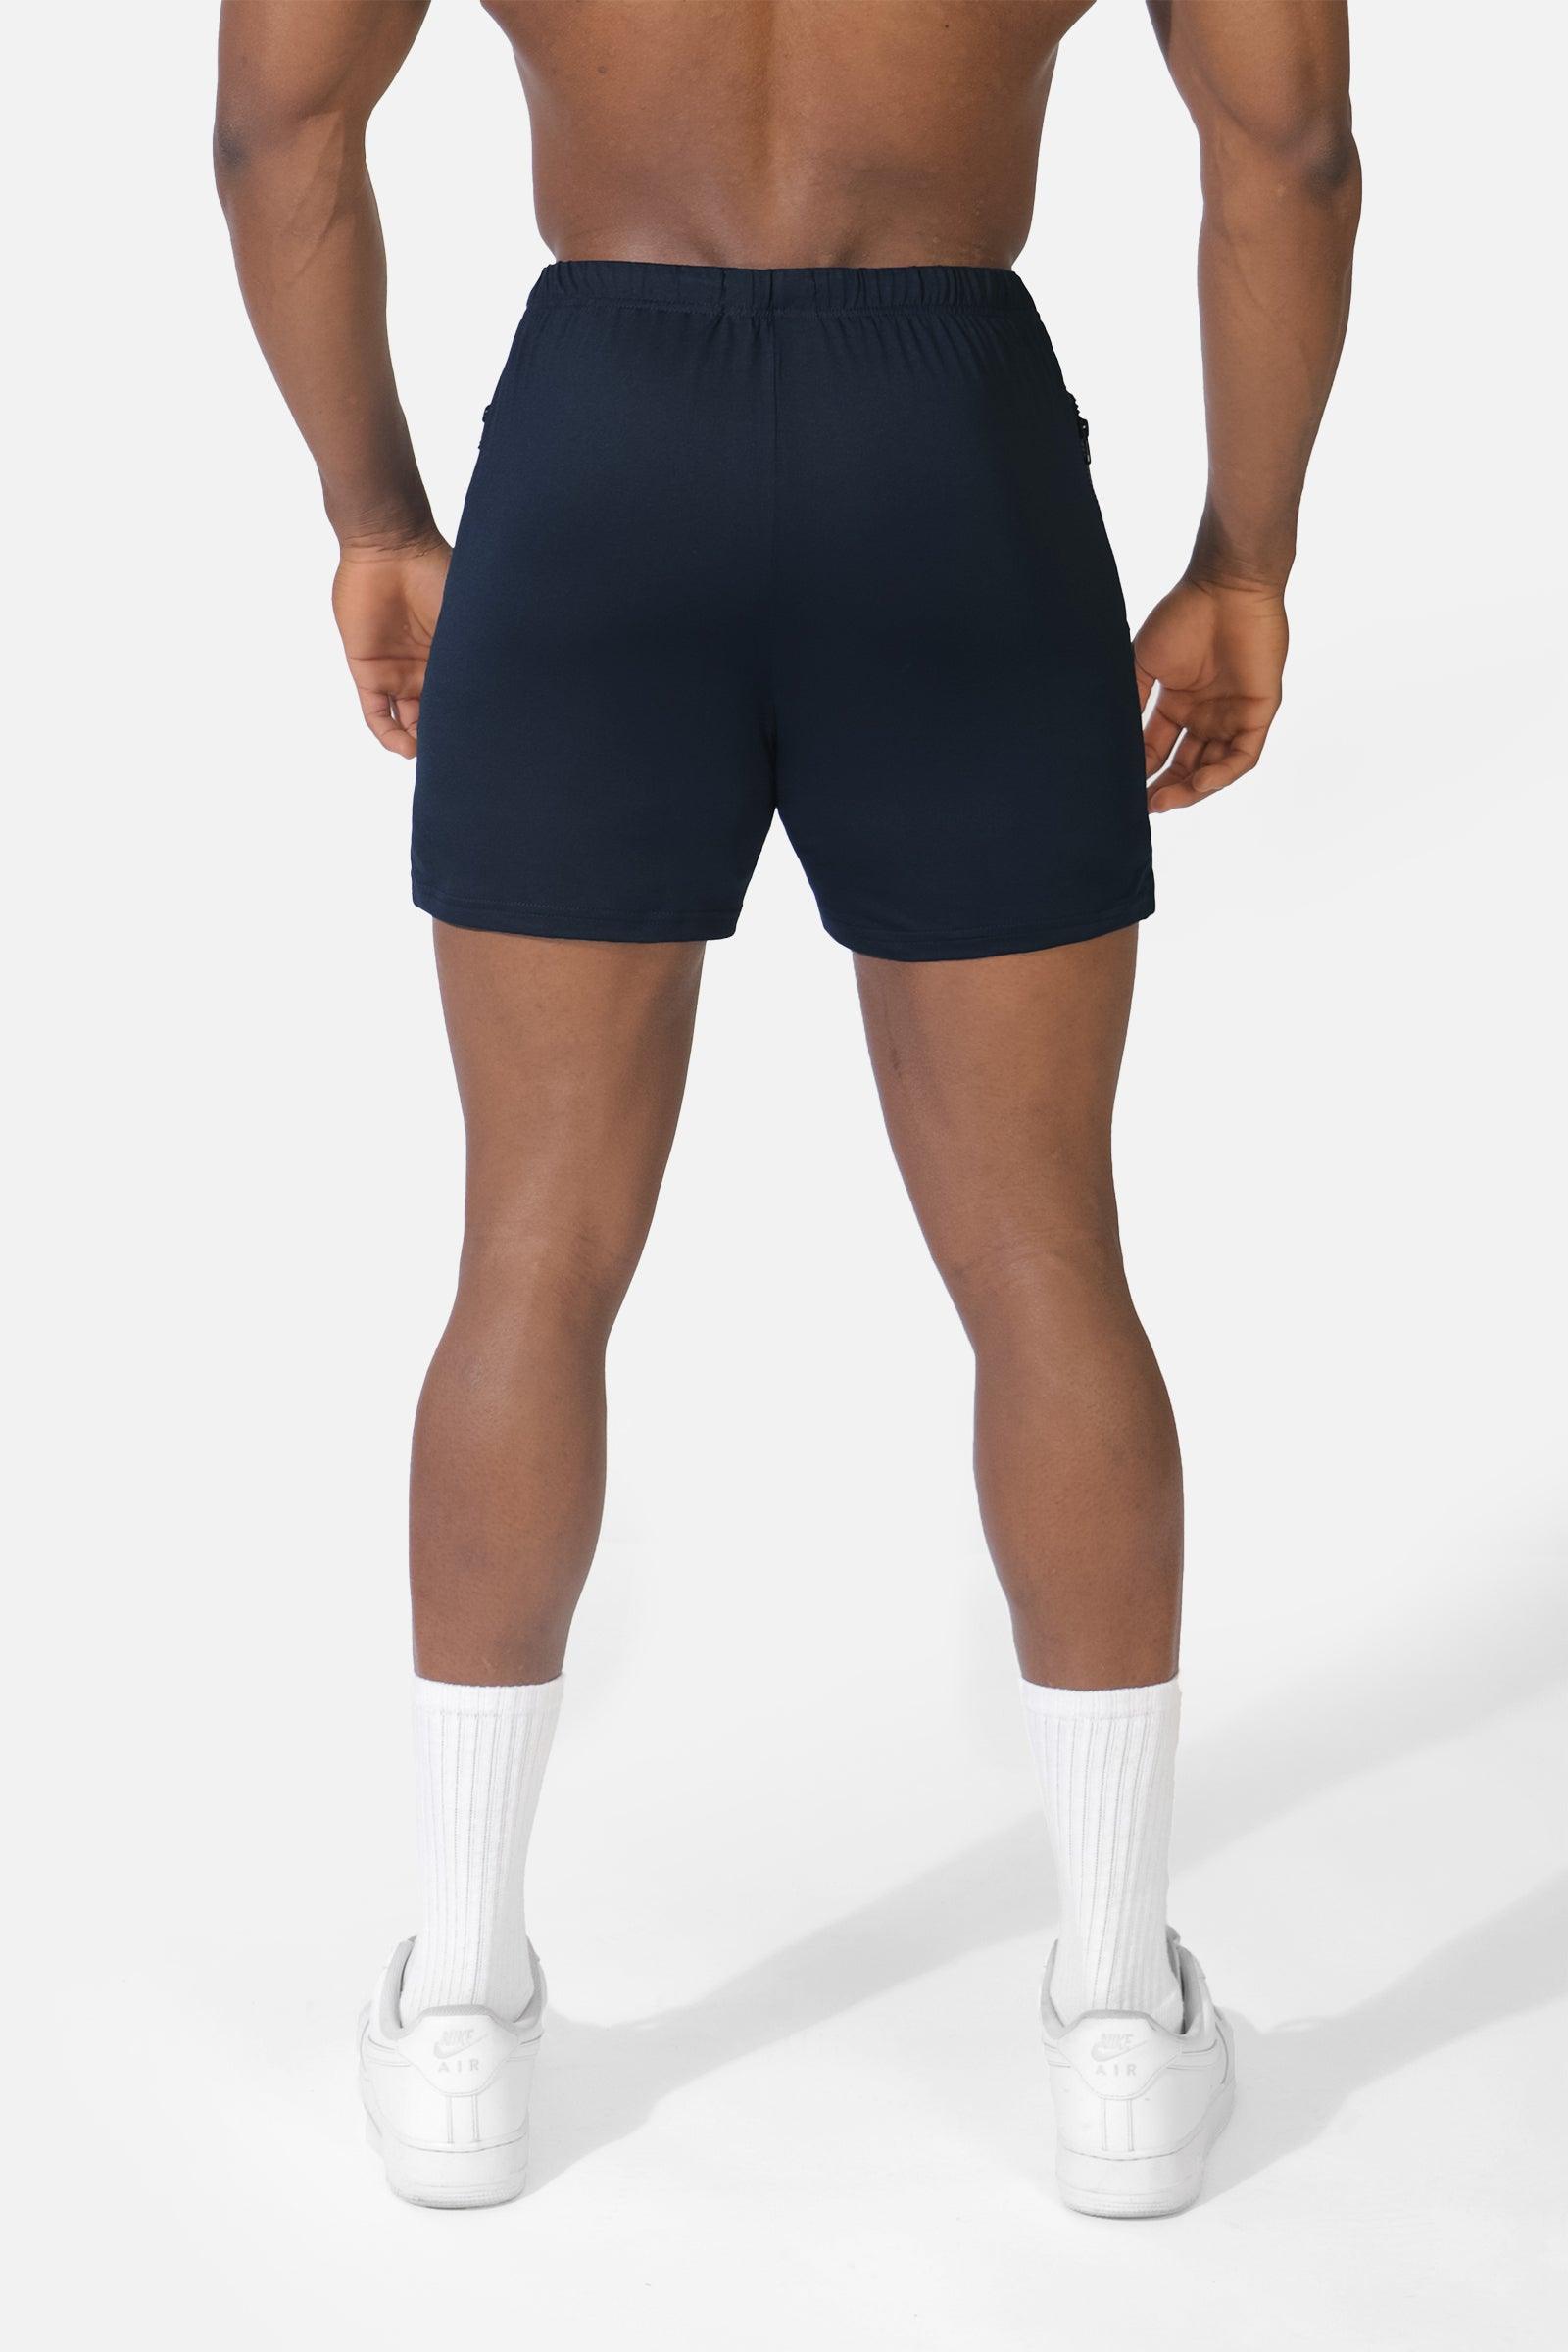 Agile Bodybuilding 4'' Shorts w Zipper Pockets - Navy Blue - Jed North